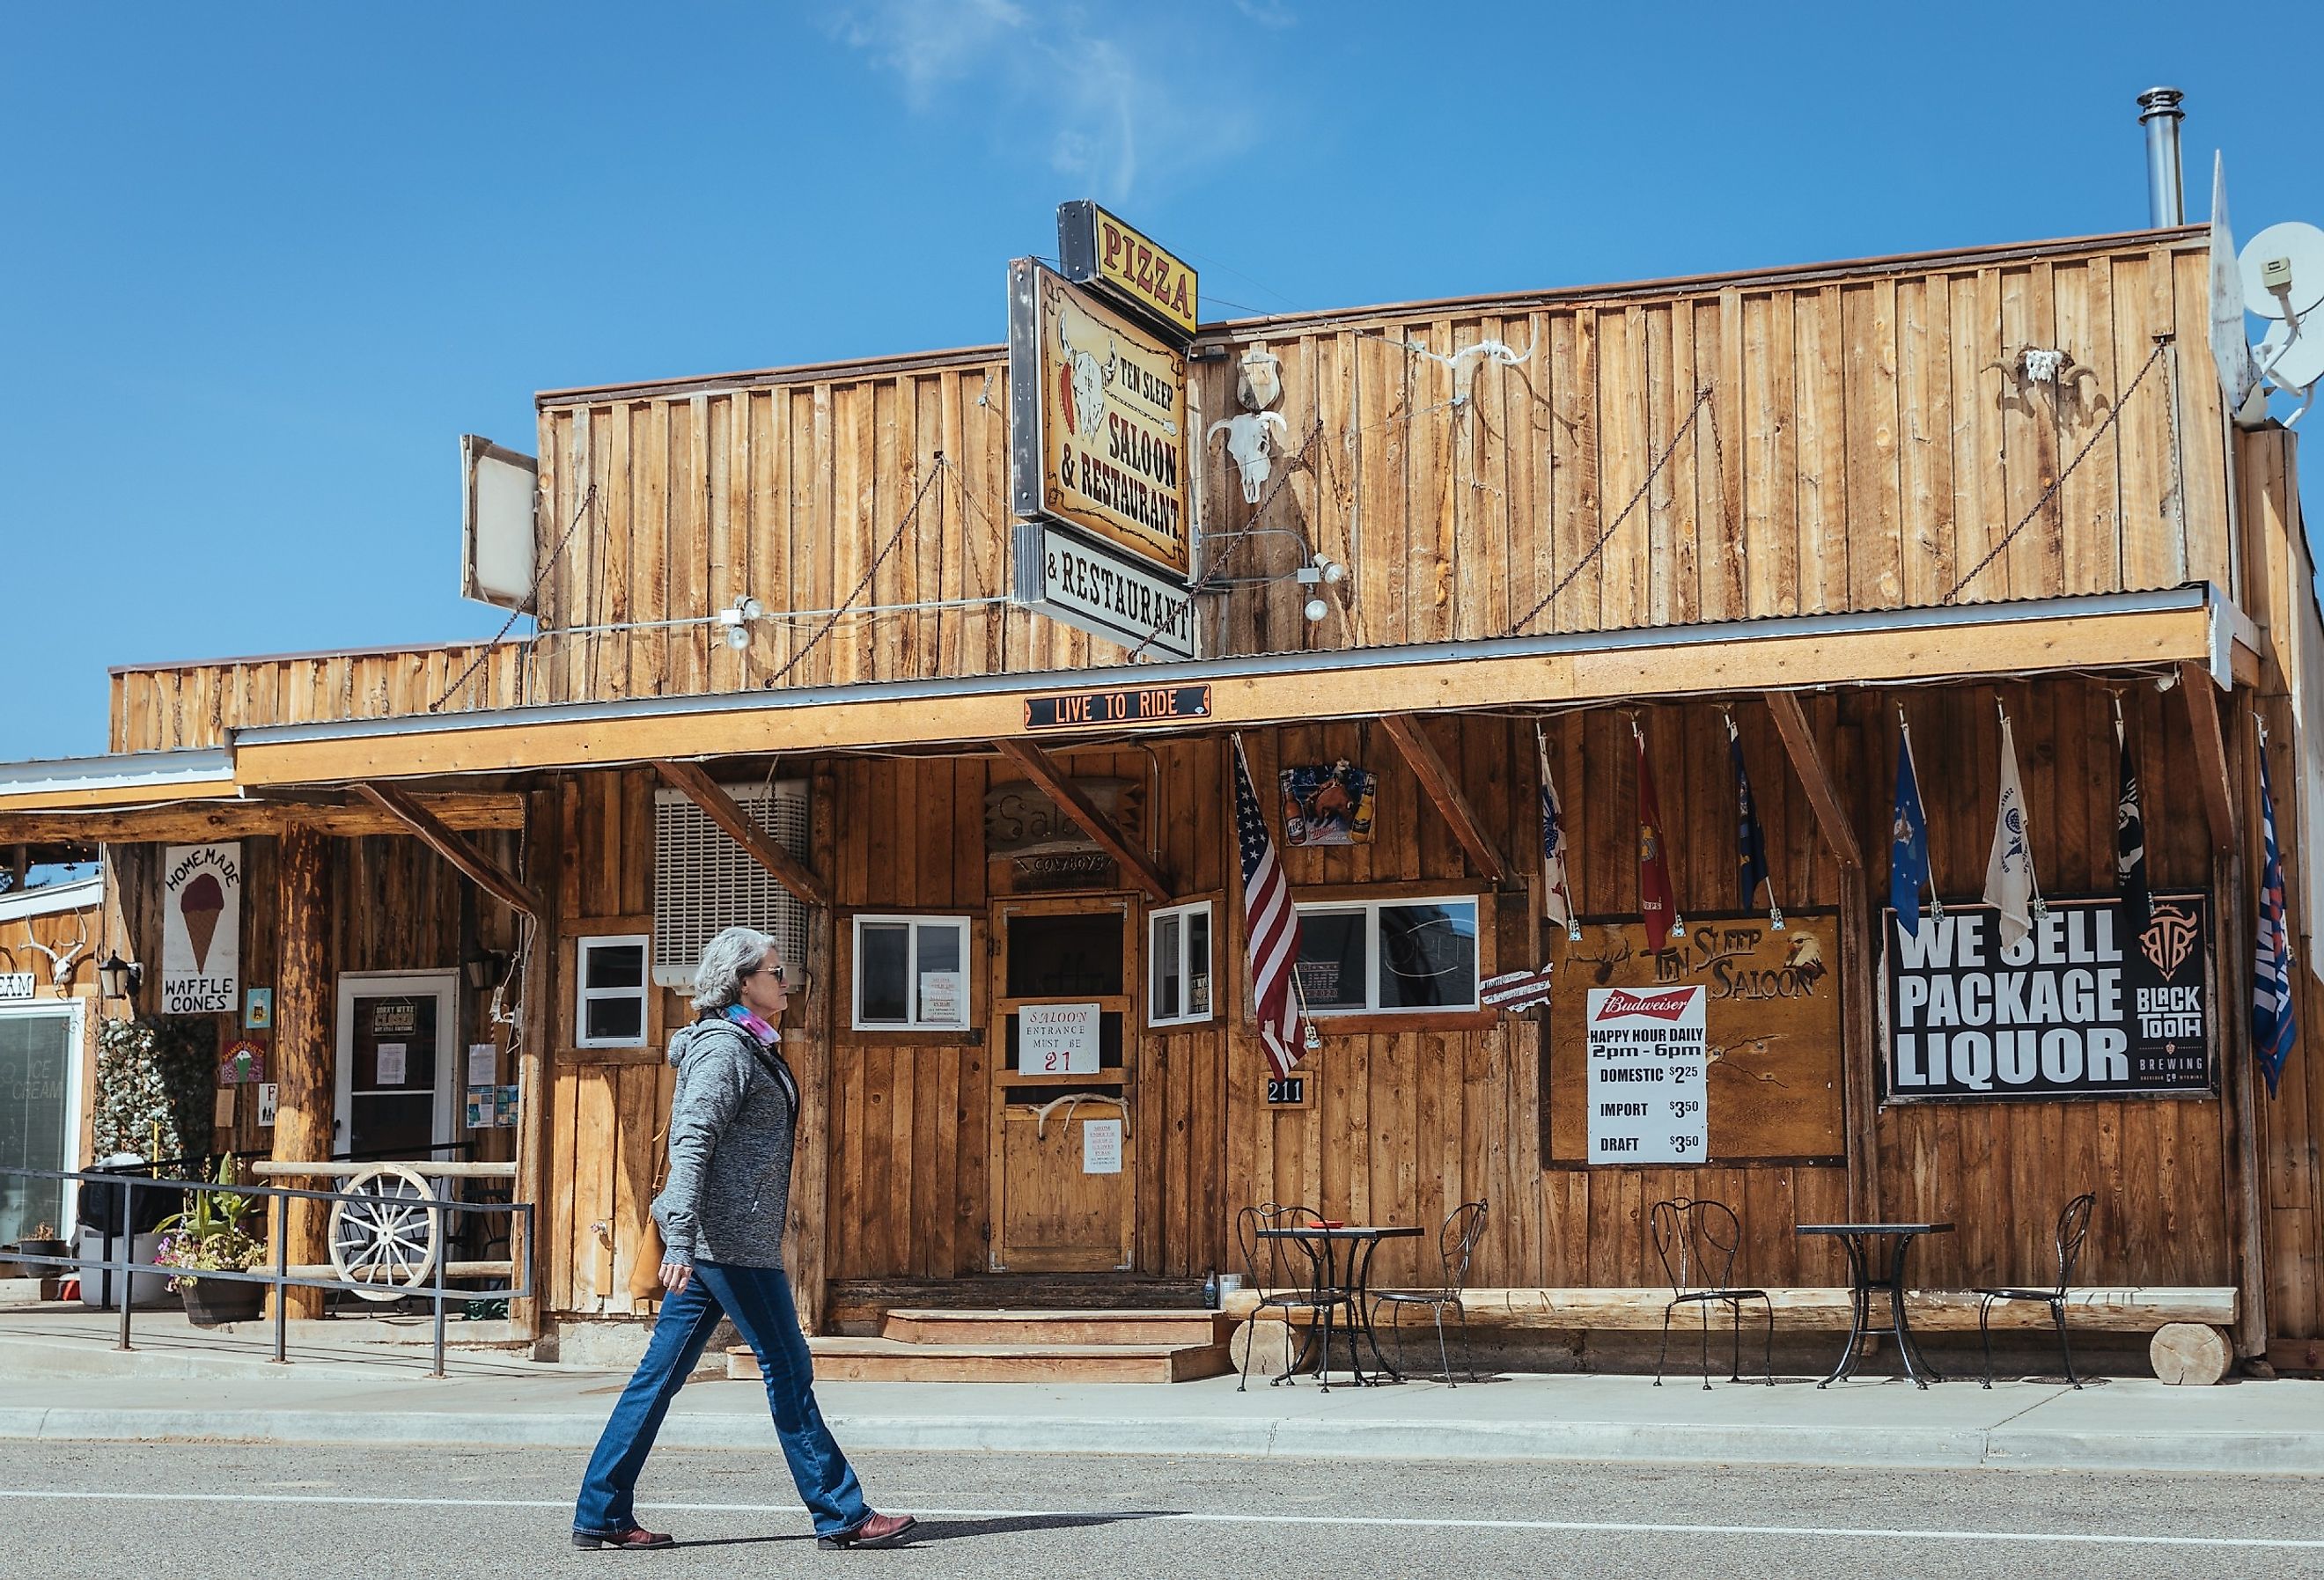 Ten Sleep Saloon Steakhouse, Wyoming. Image credit magraphy via Shutterstock